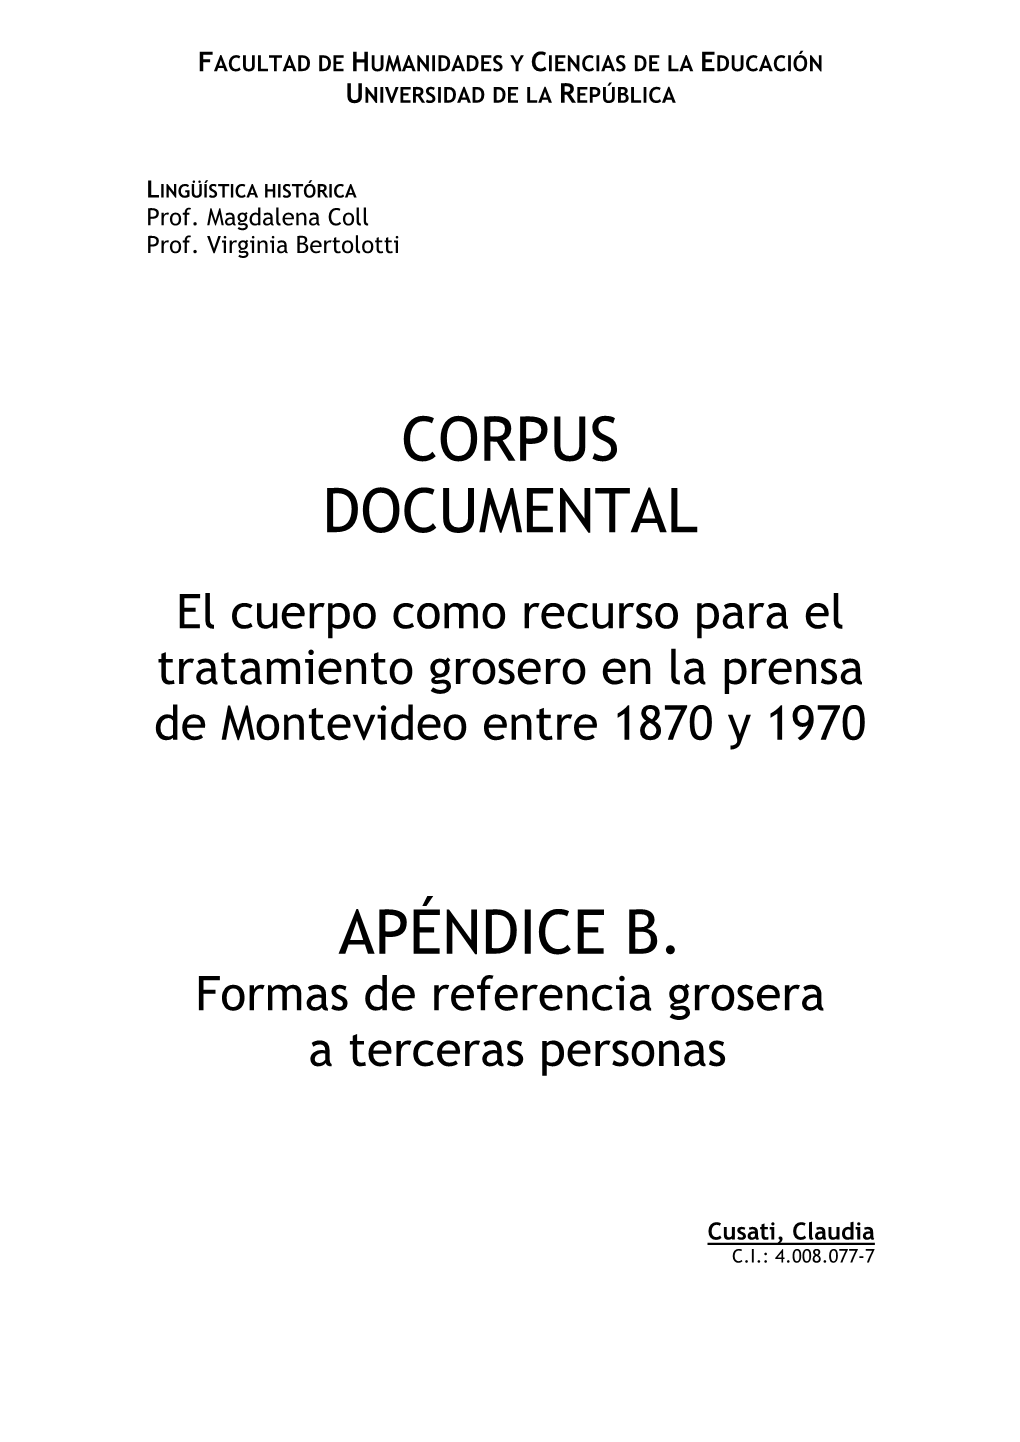 Corpus Documental Apéndice B